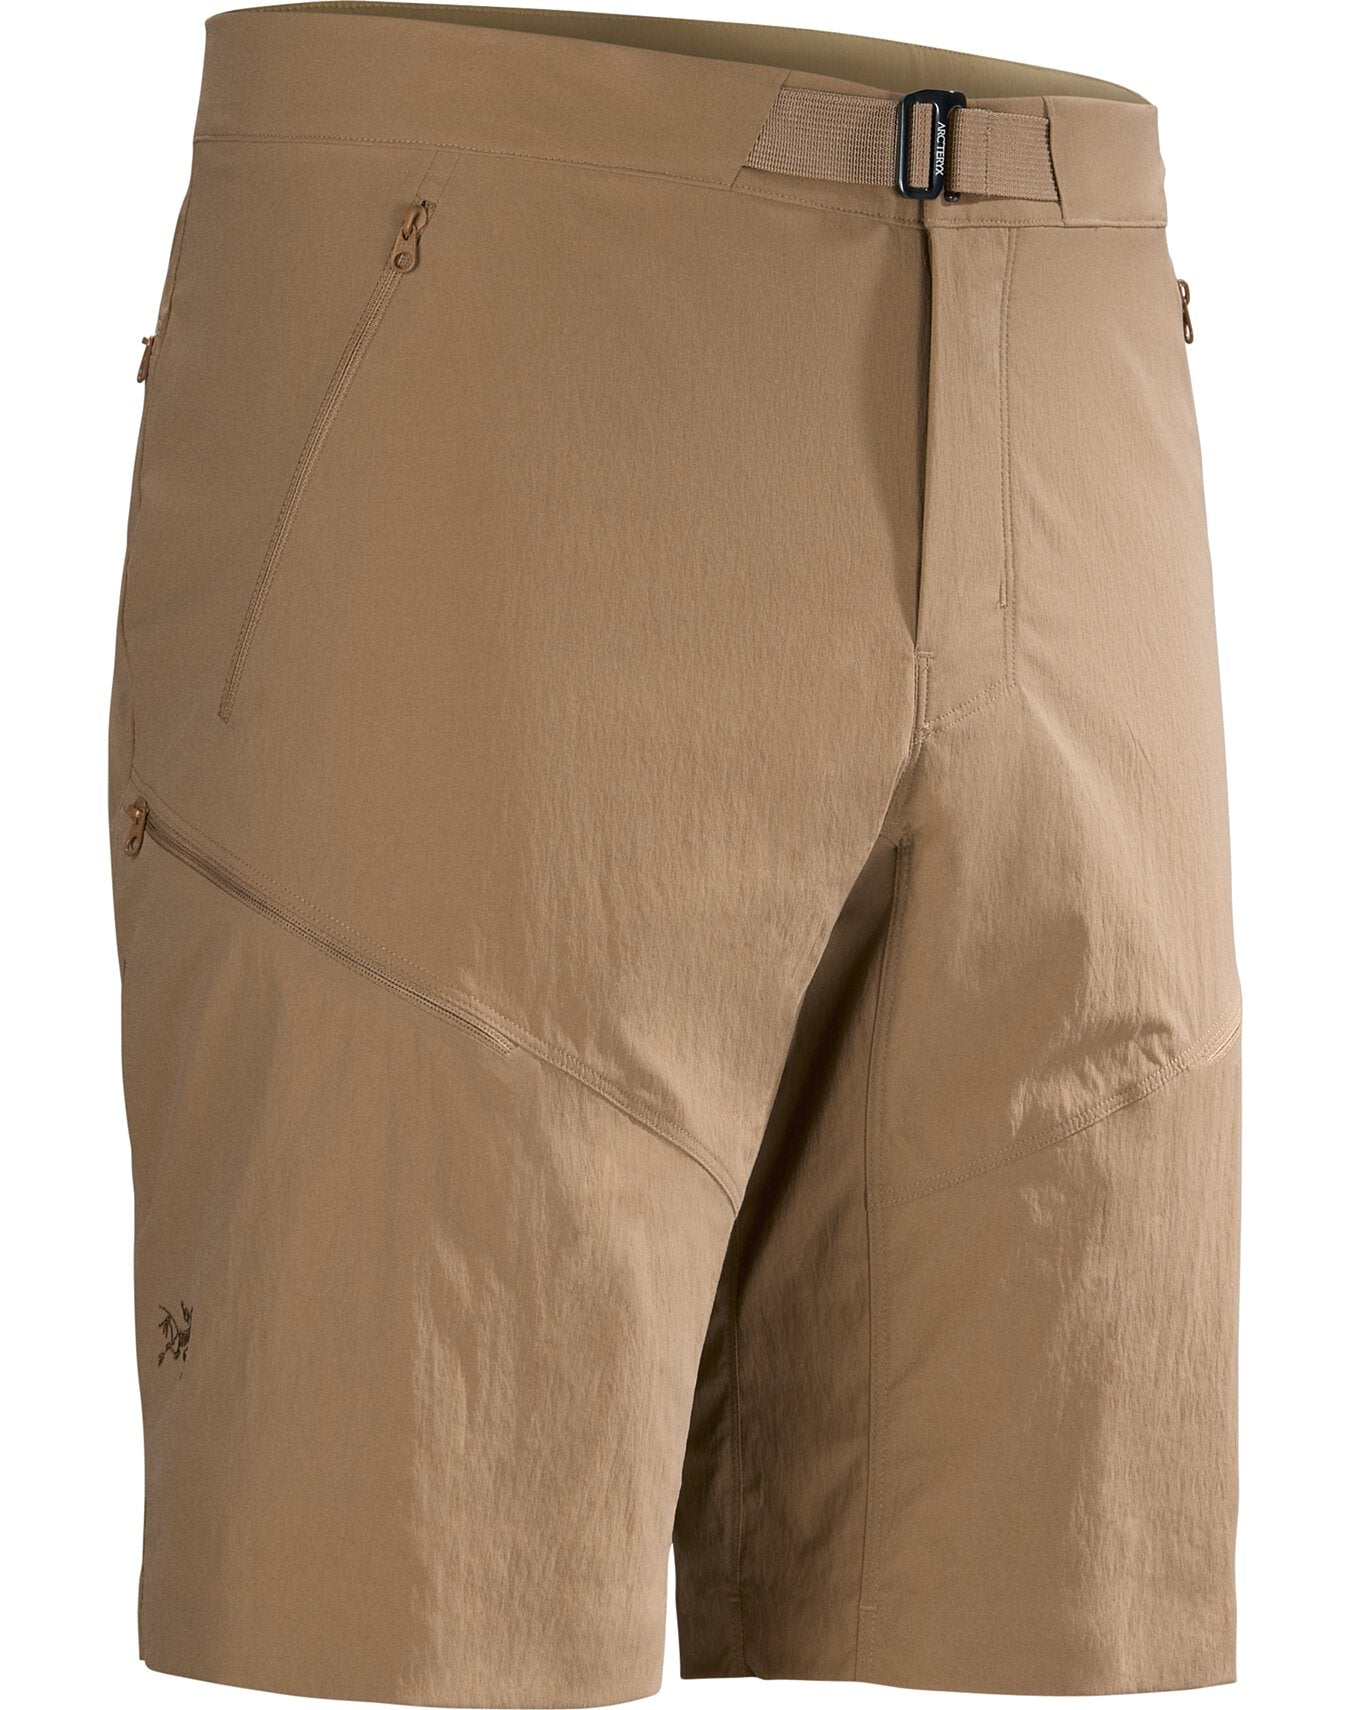 Arc'teryx Men's Gamma Quick Dry 11" Shorts